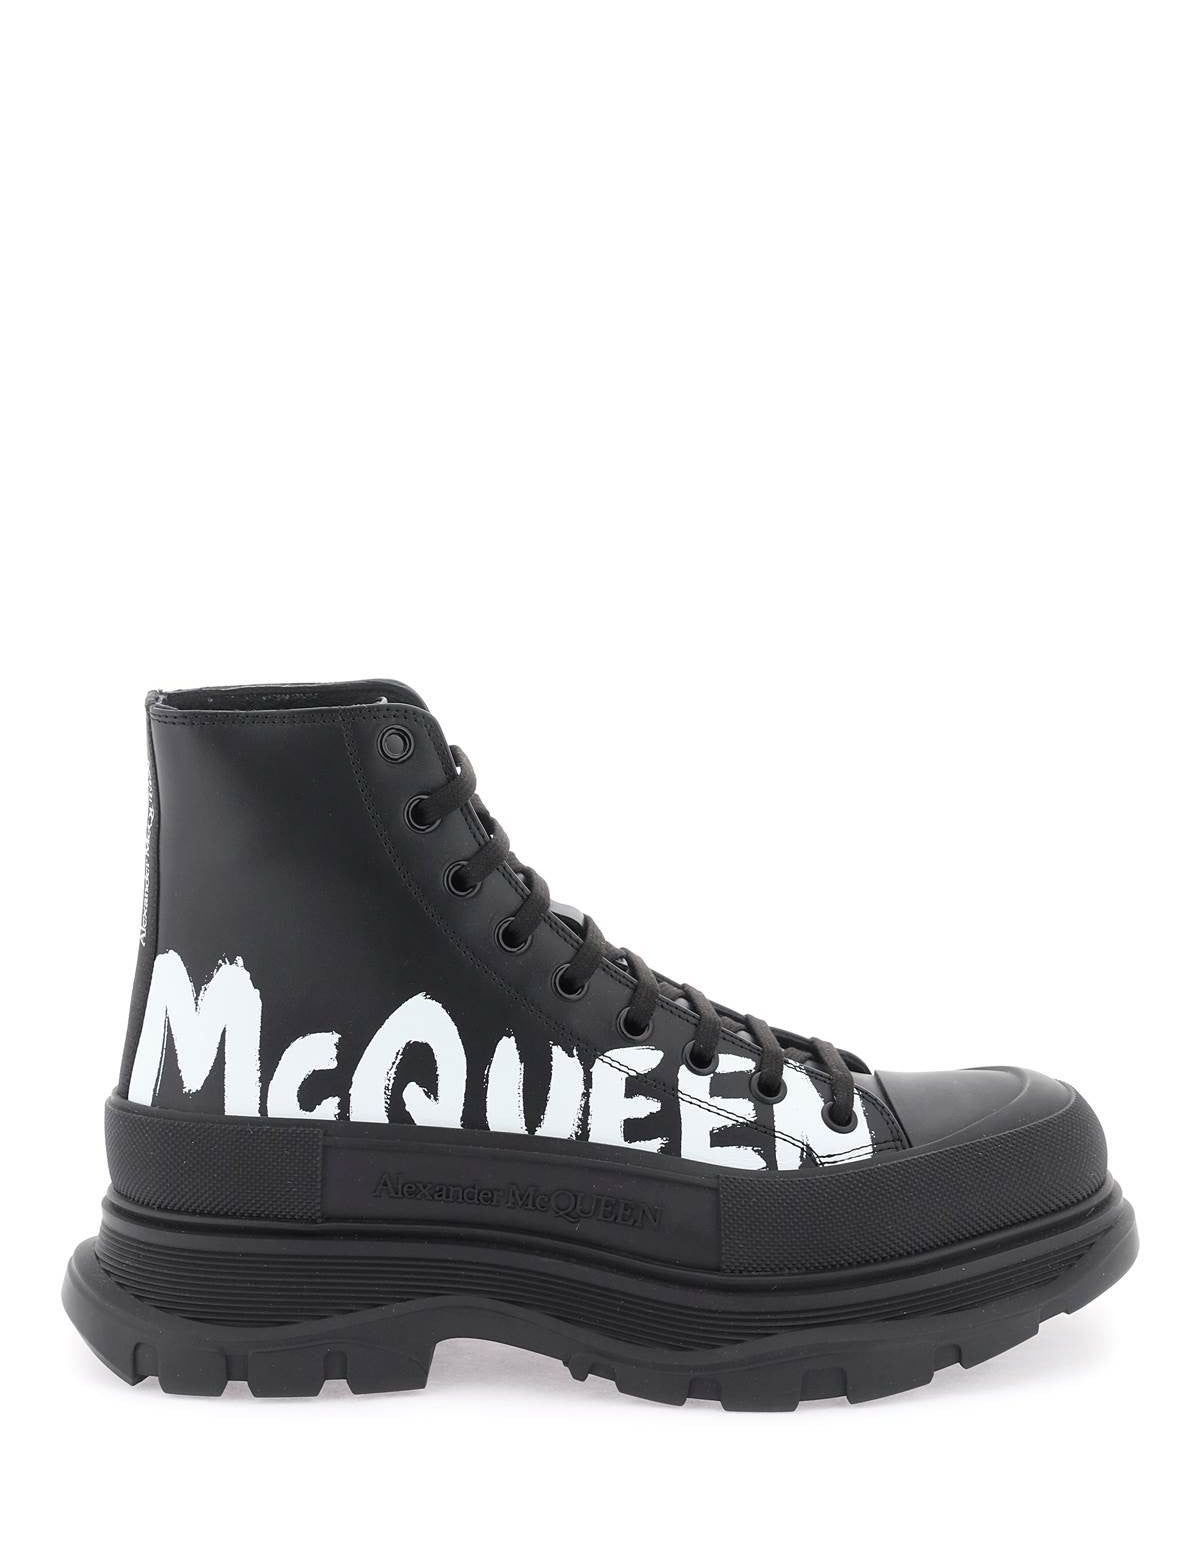 alexander-mcqueen-graffiti-print-leather-tread-slick-ankle-boots.jpg